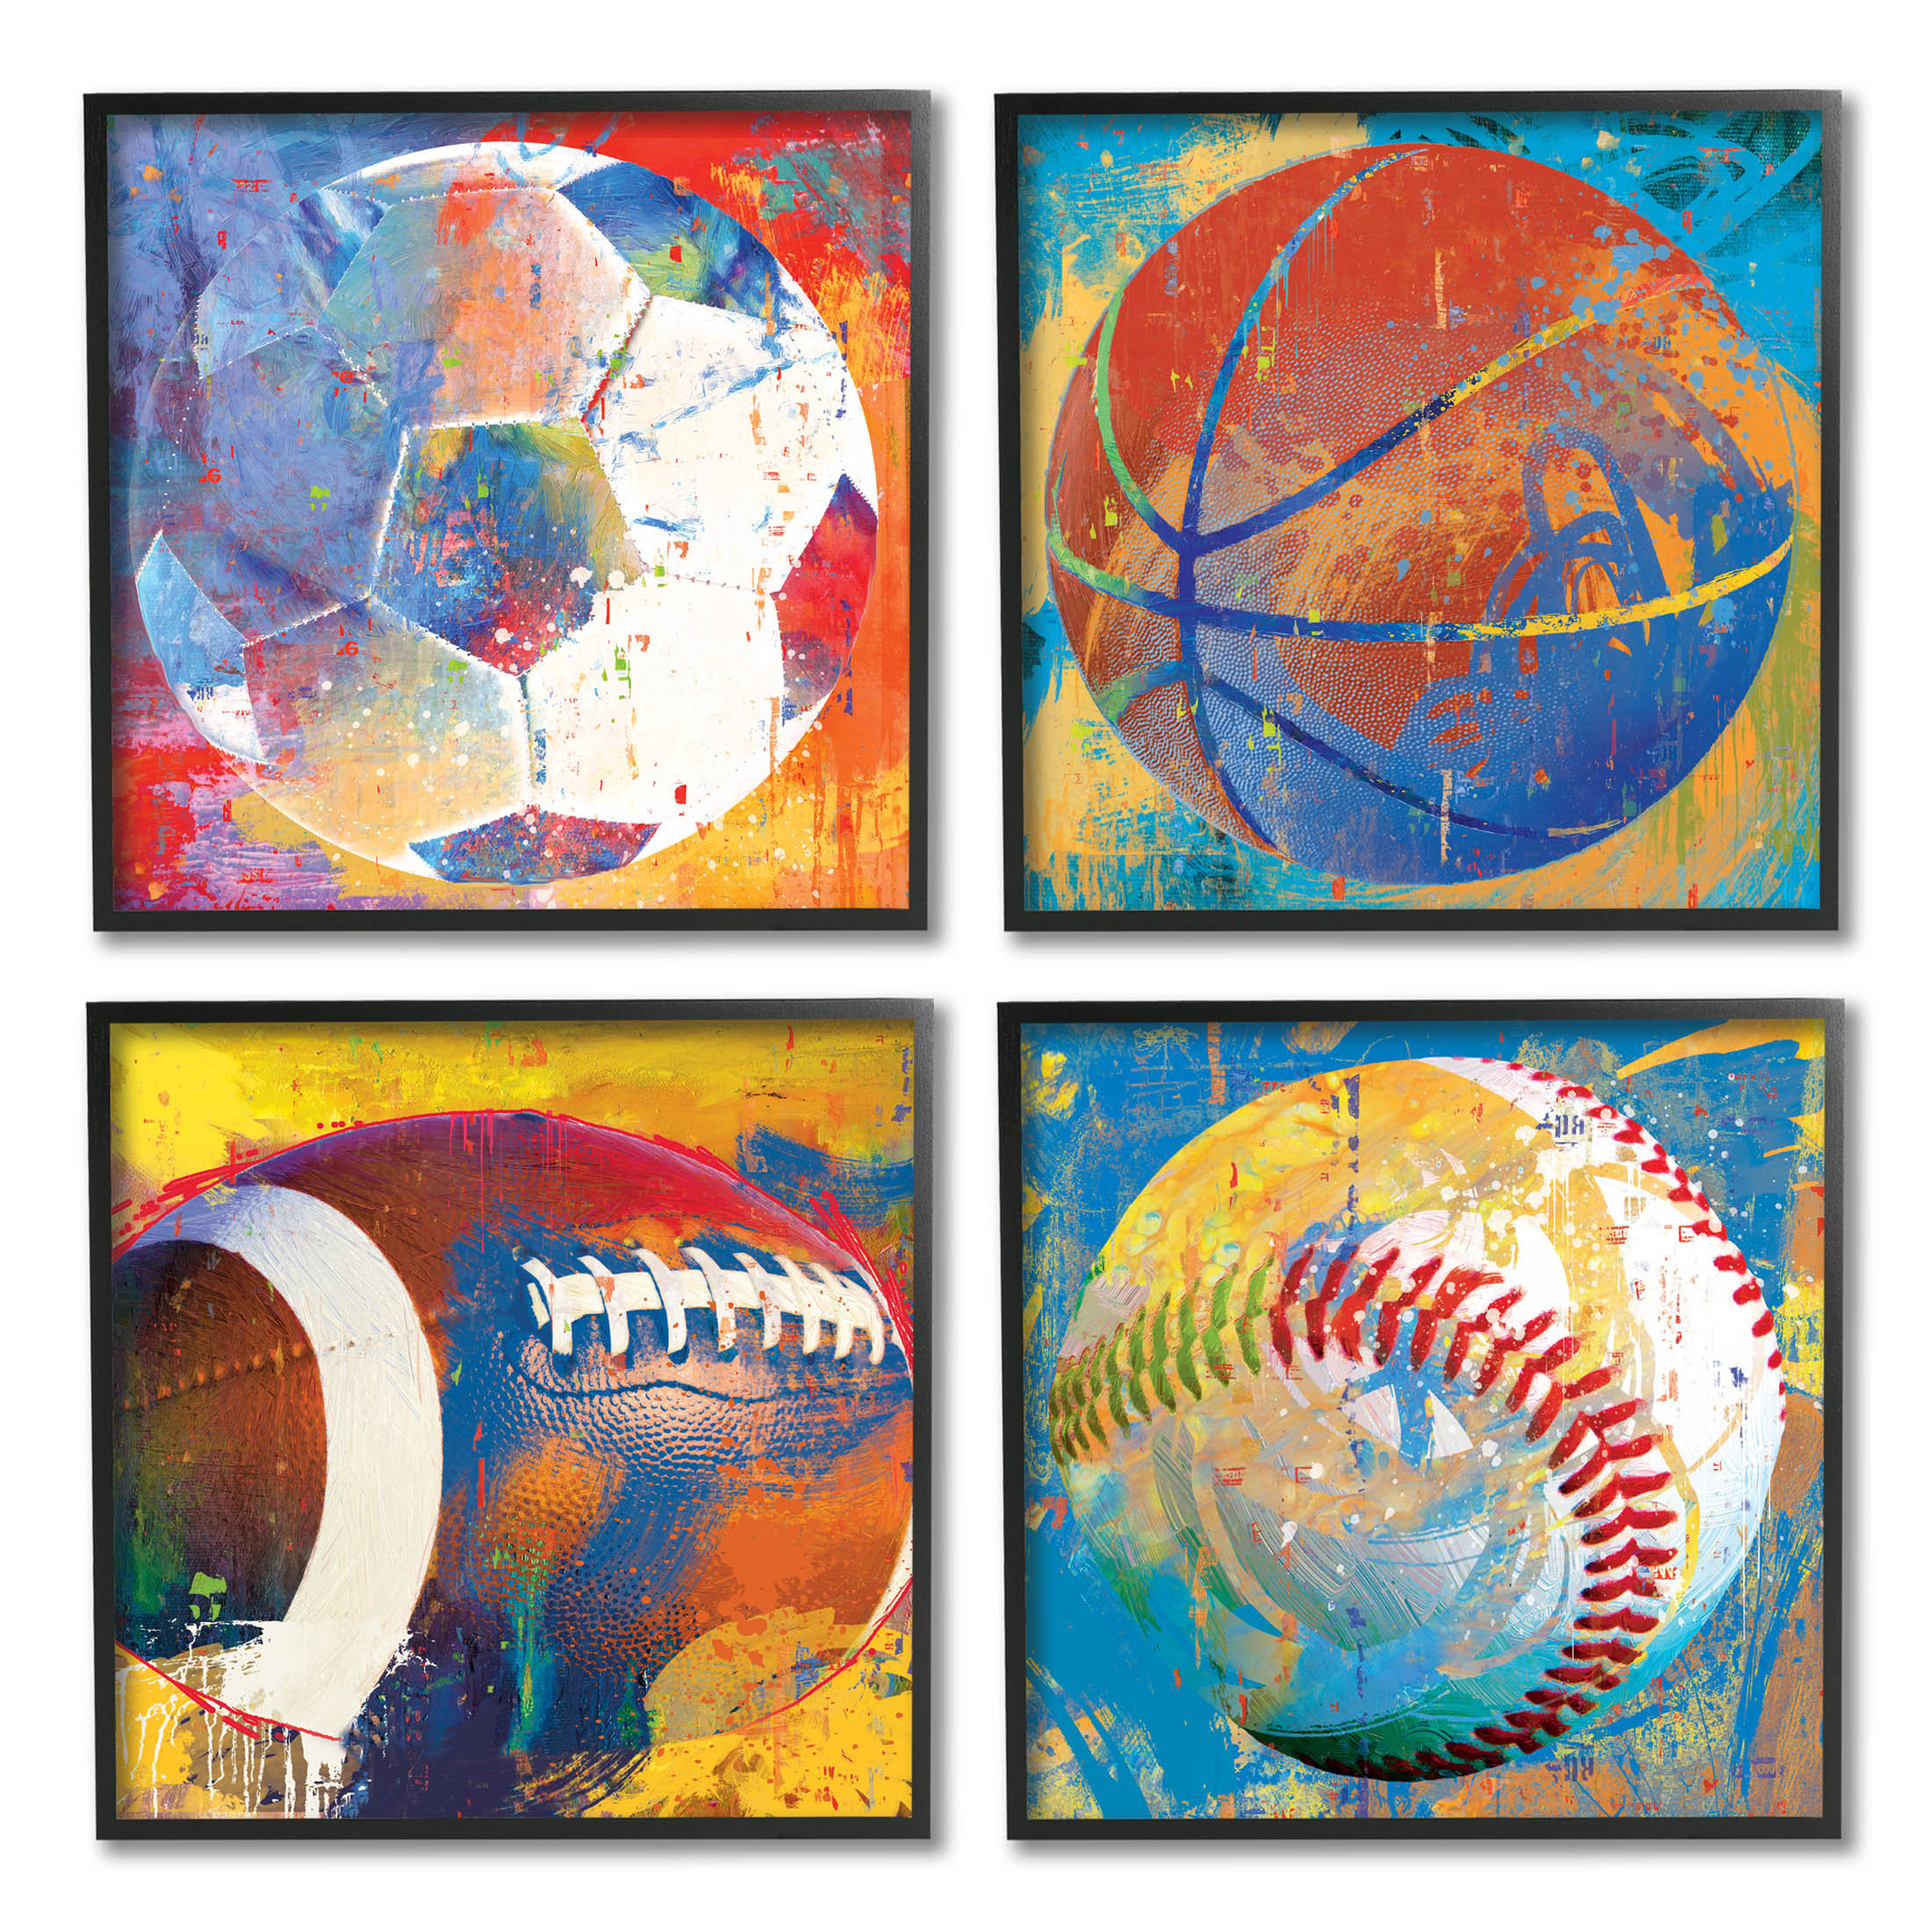 sports balls collage